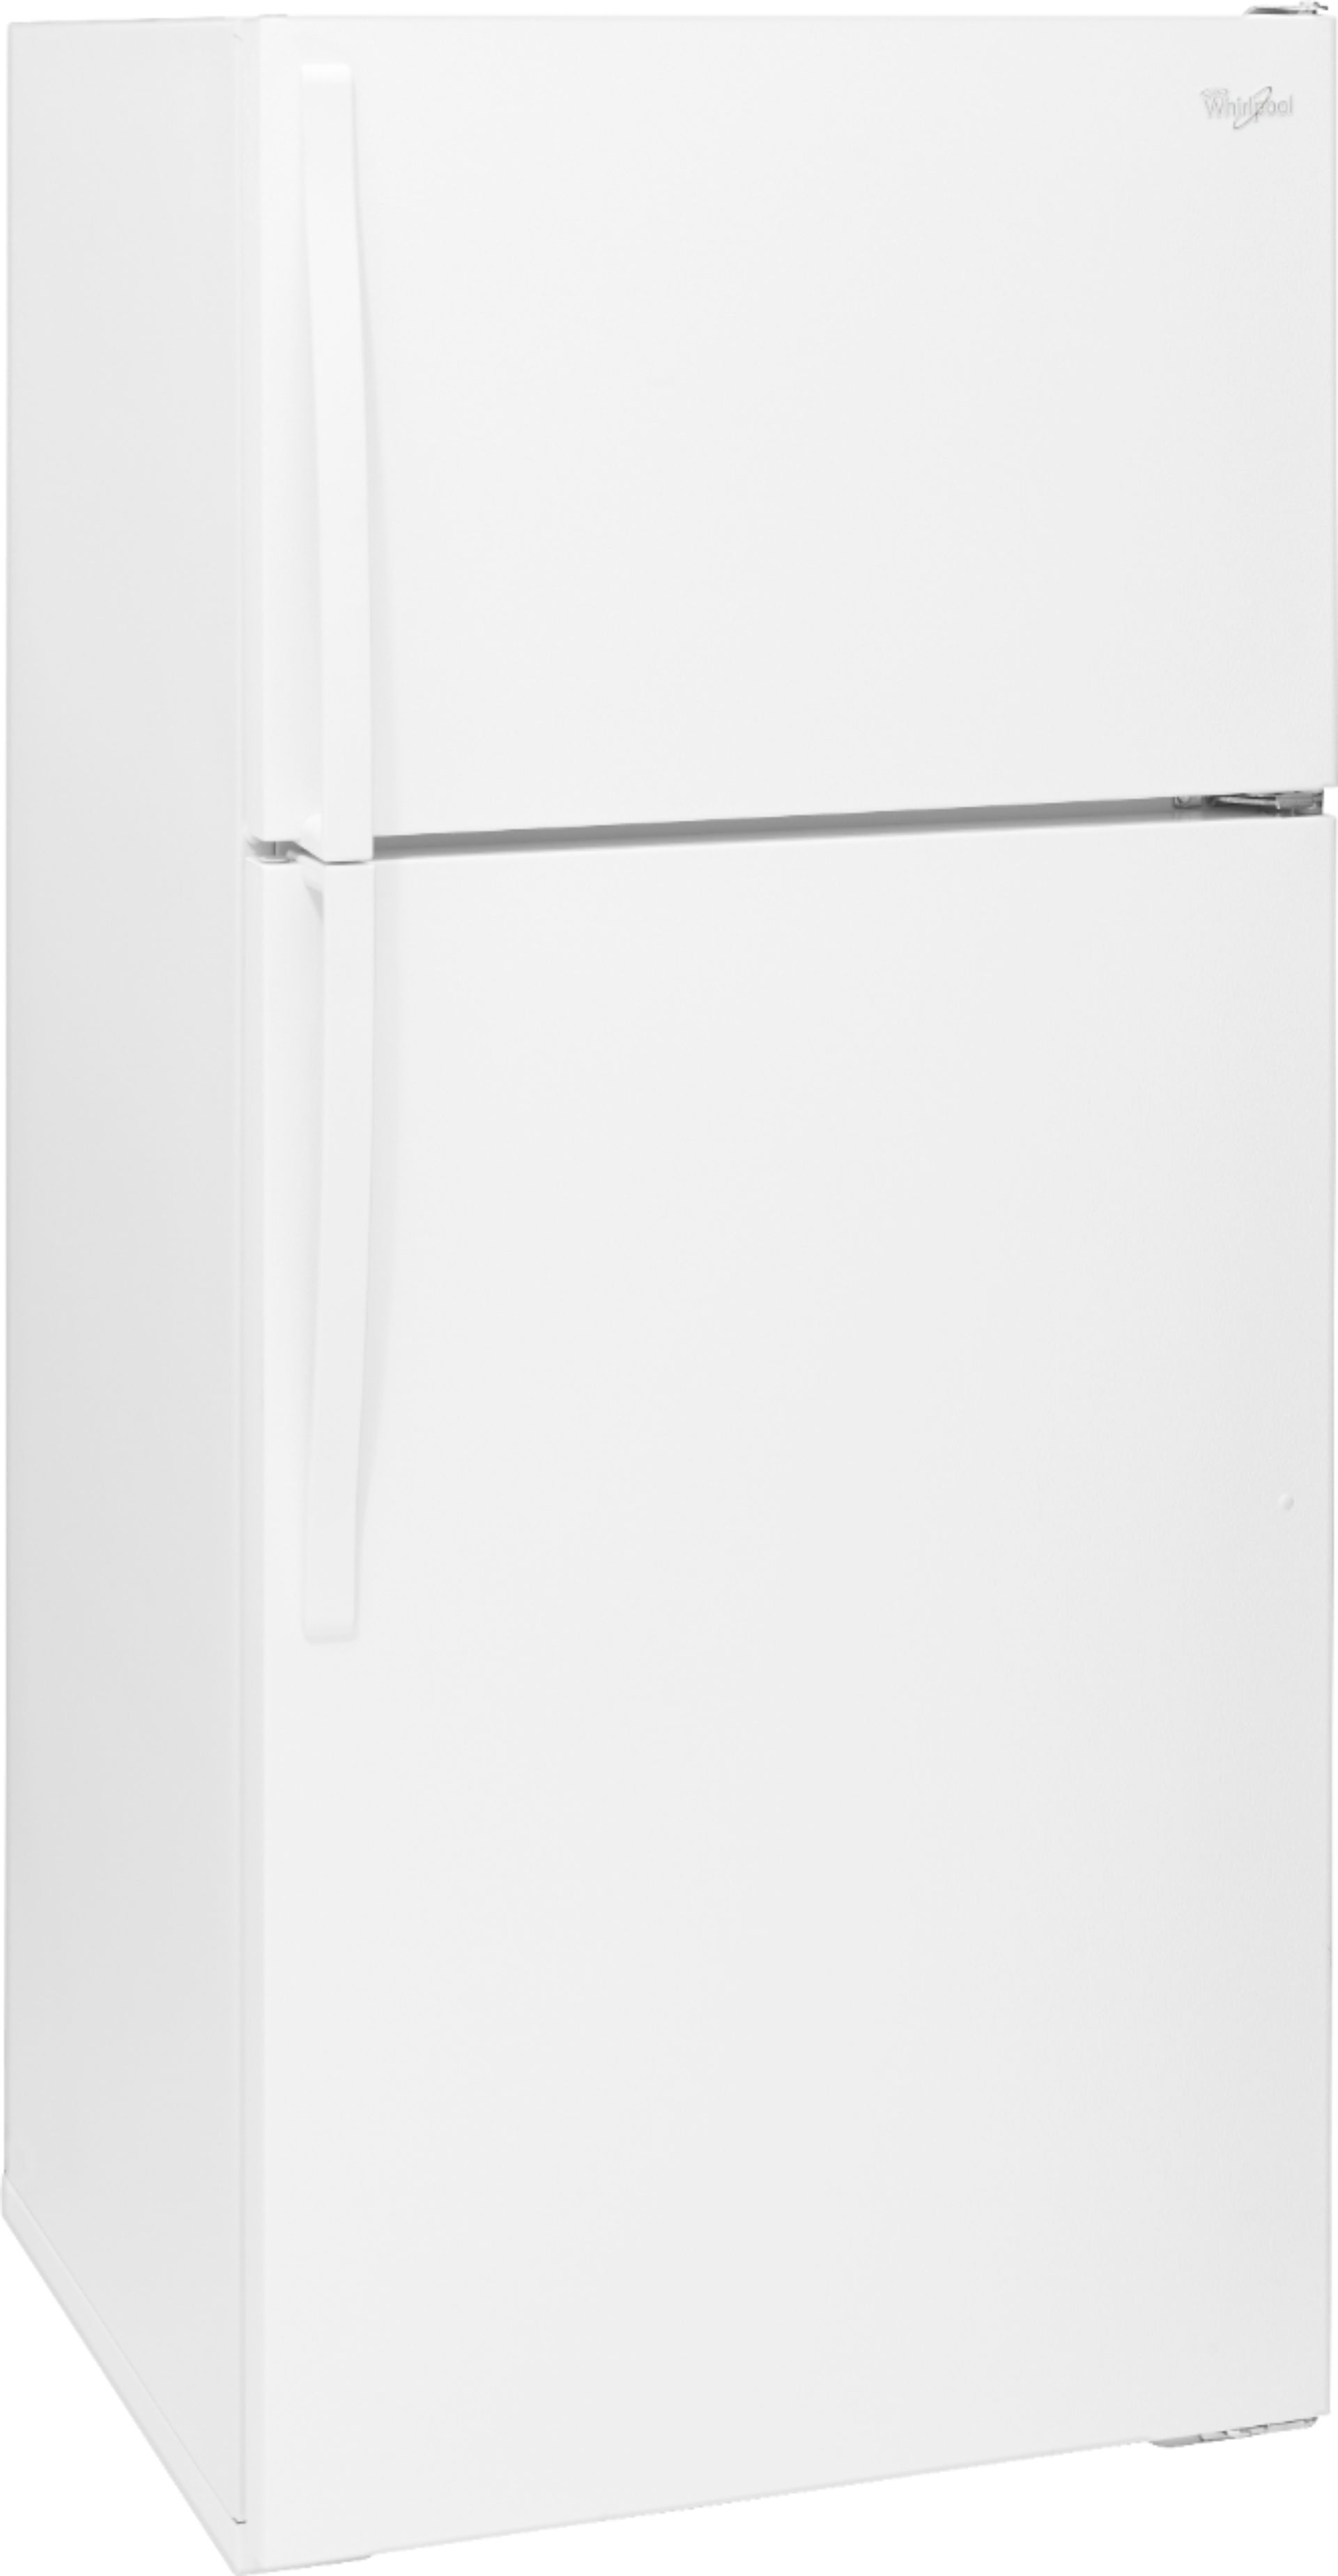 Angle View: Whirlpool - 14.3 Cu. Ft. Top-Freezer Refrigerator - White